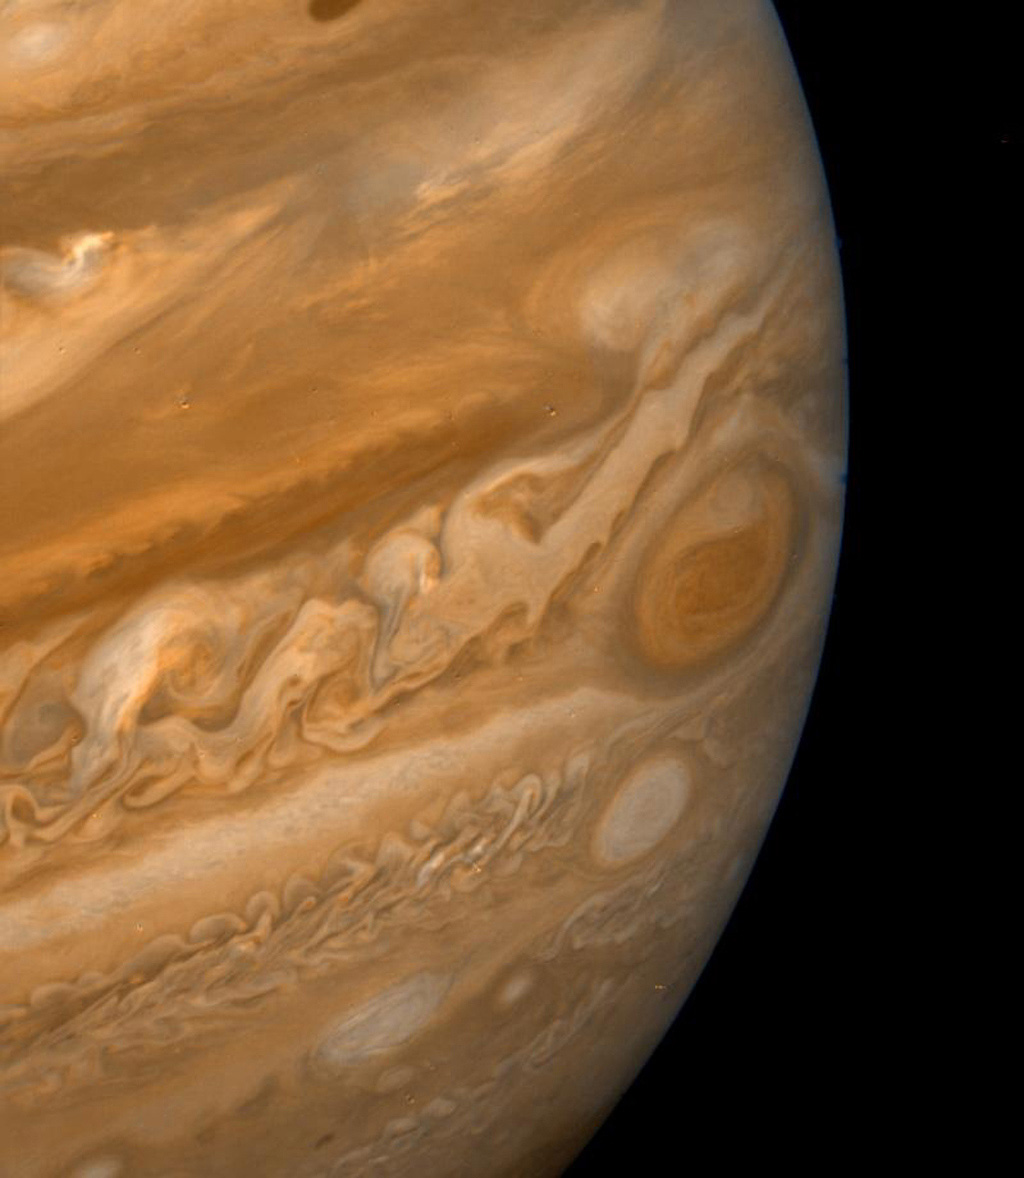 Image of Jupiter’s Great Red Spot.